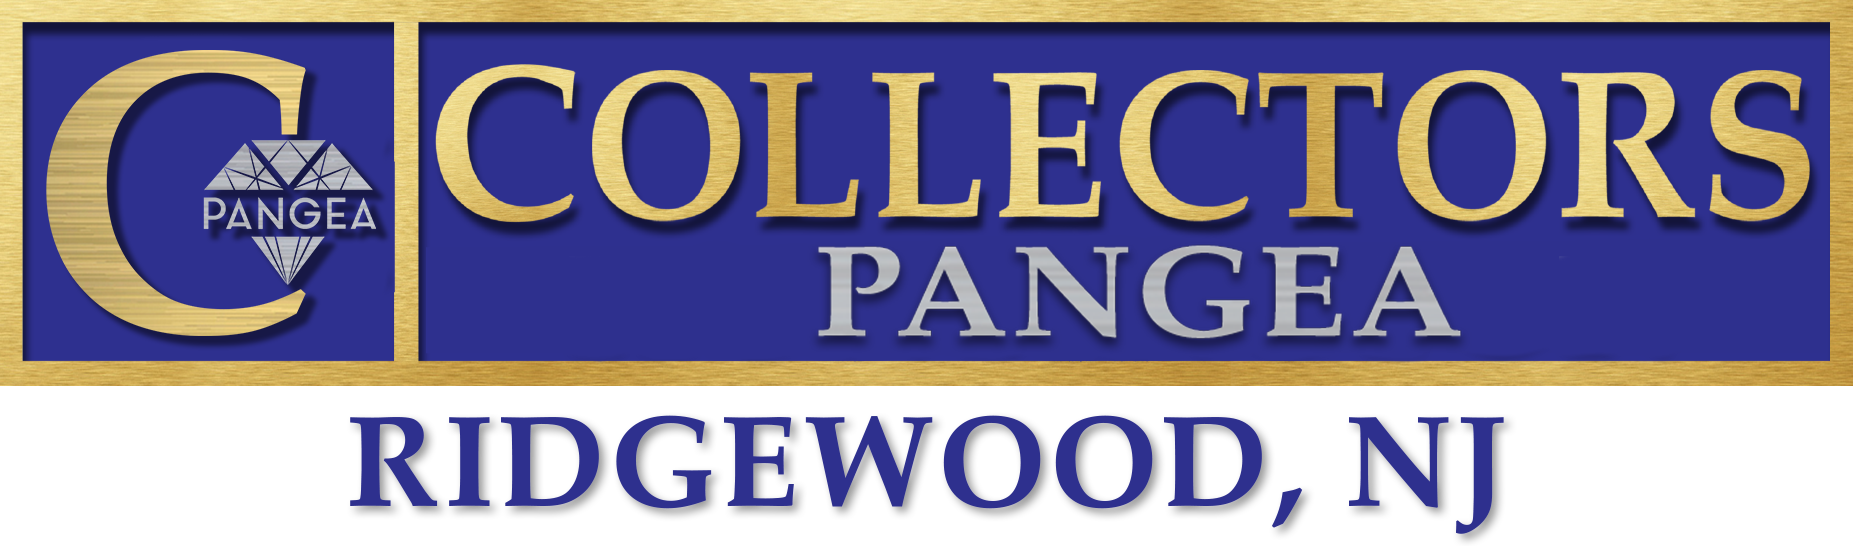 collectors Pangea Ridgewood, NJ logo